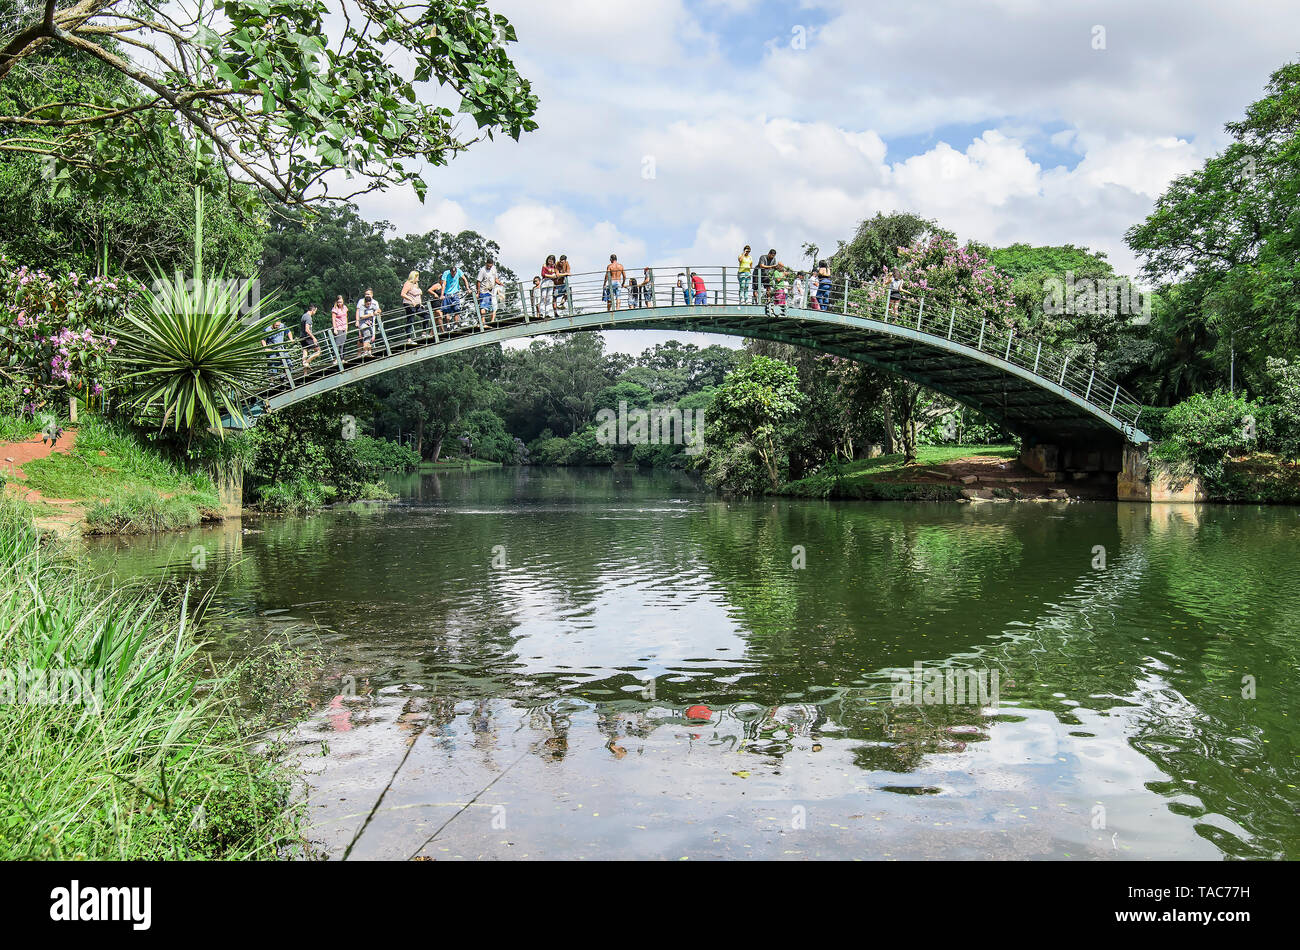 Sao Paulo SP, Brazil - March 02, 2019: Arched metal bridge above the lake of the Ibirapuera park. Bridge known as Ponte Metalica or Ponte Japonesa. Stock Photo